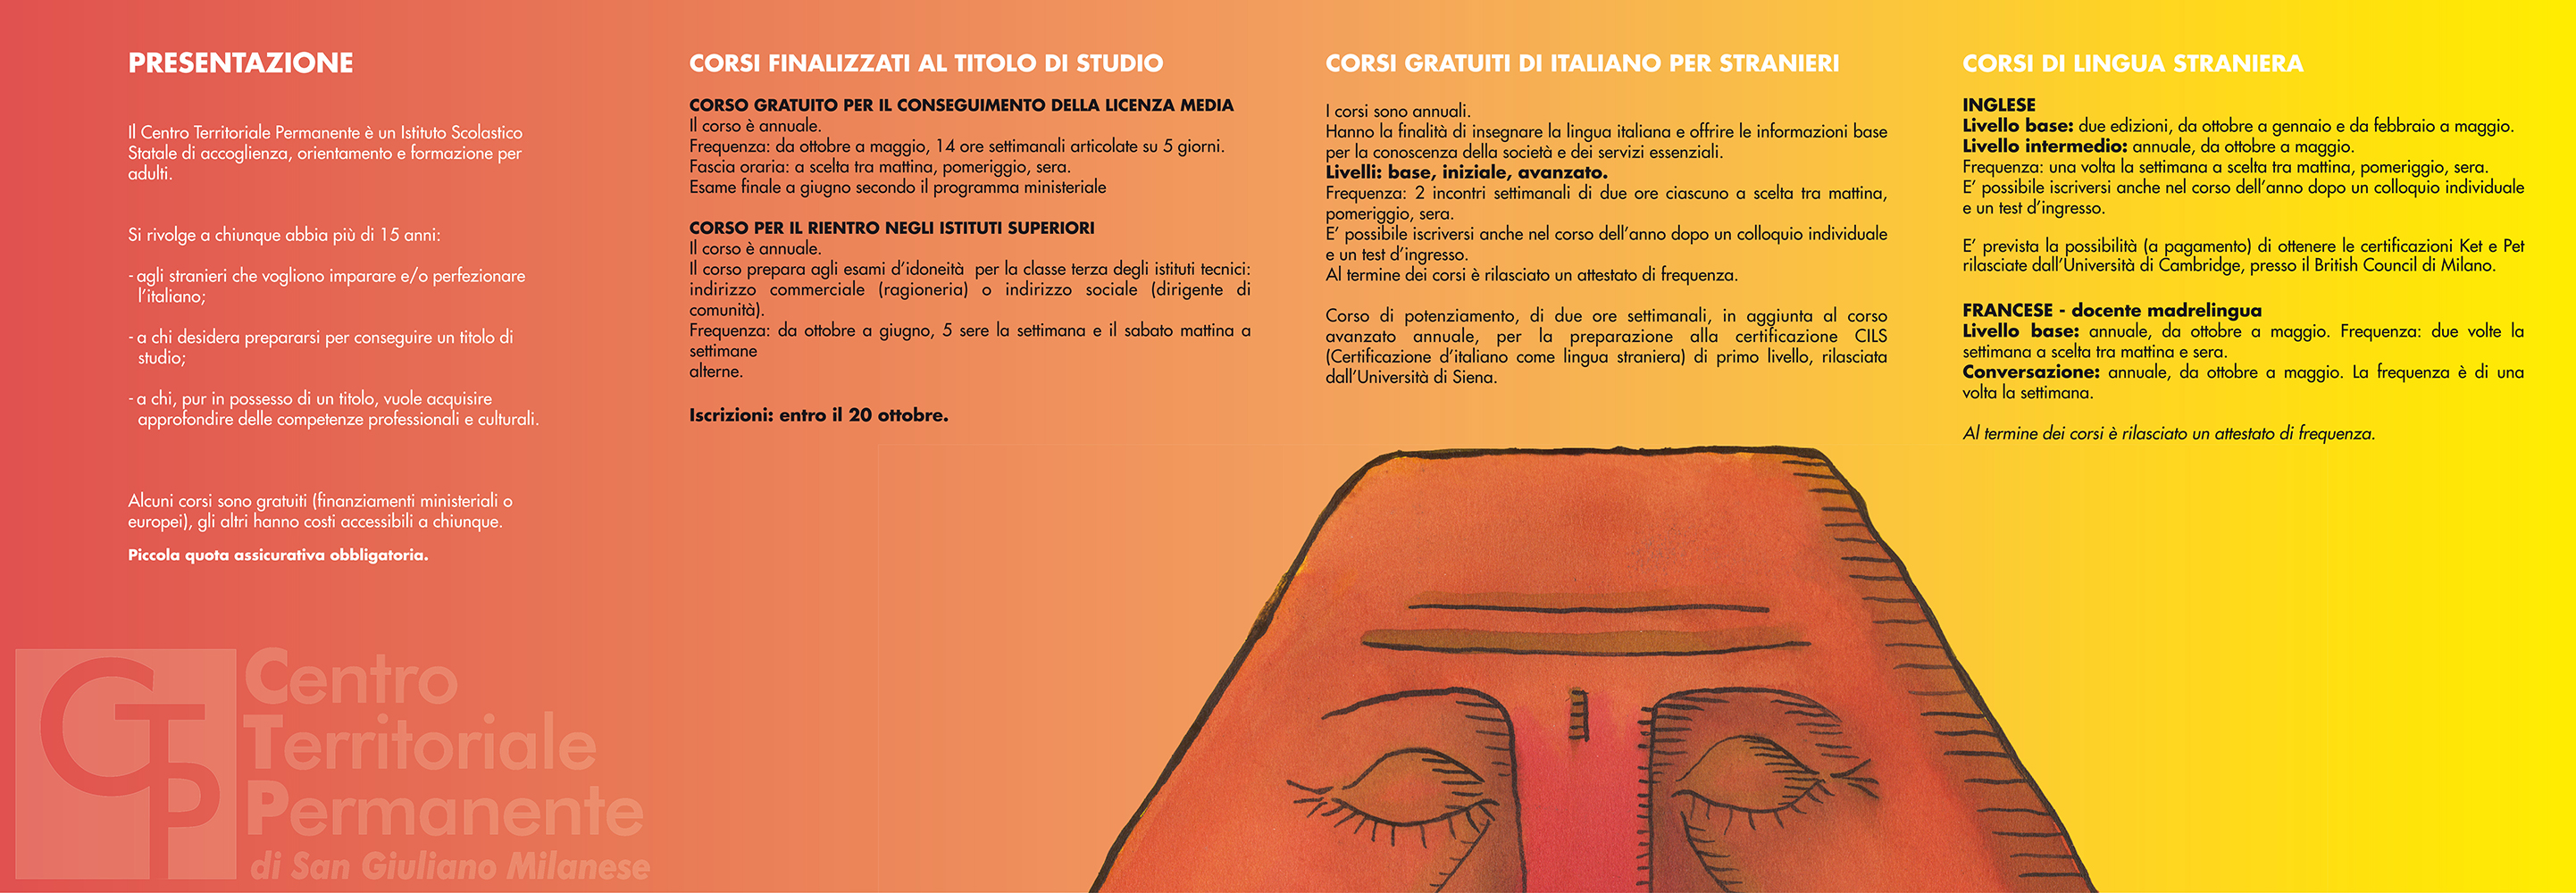 leaflet_interno